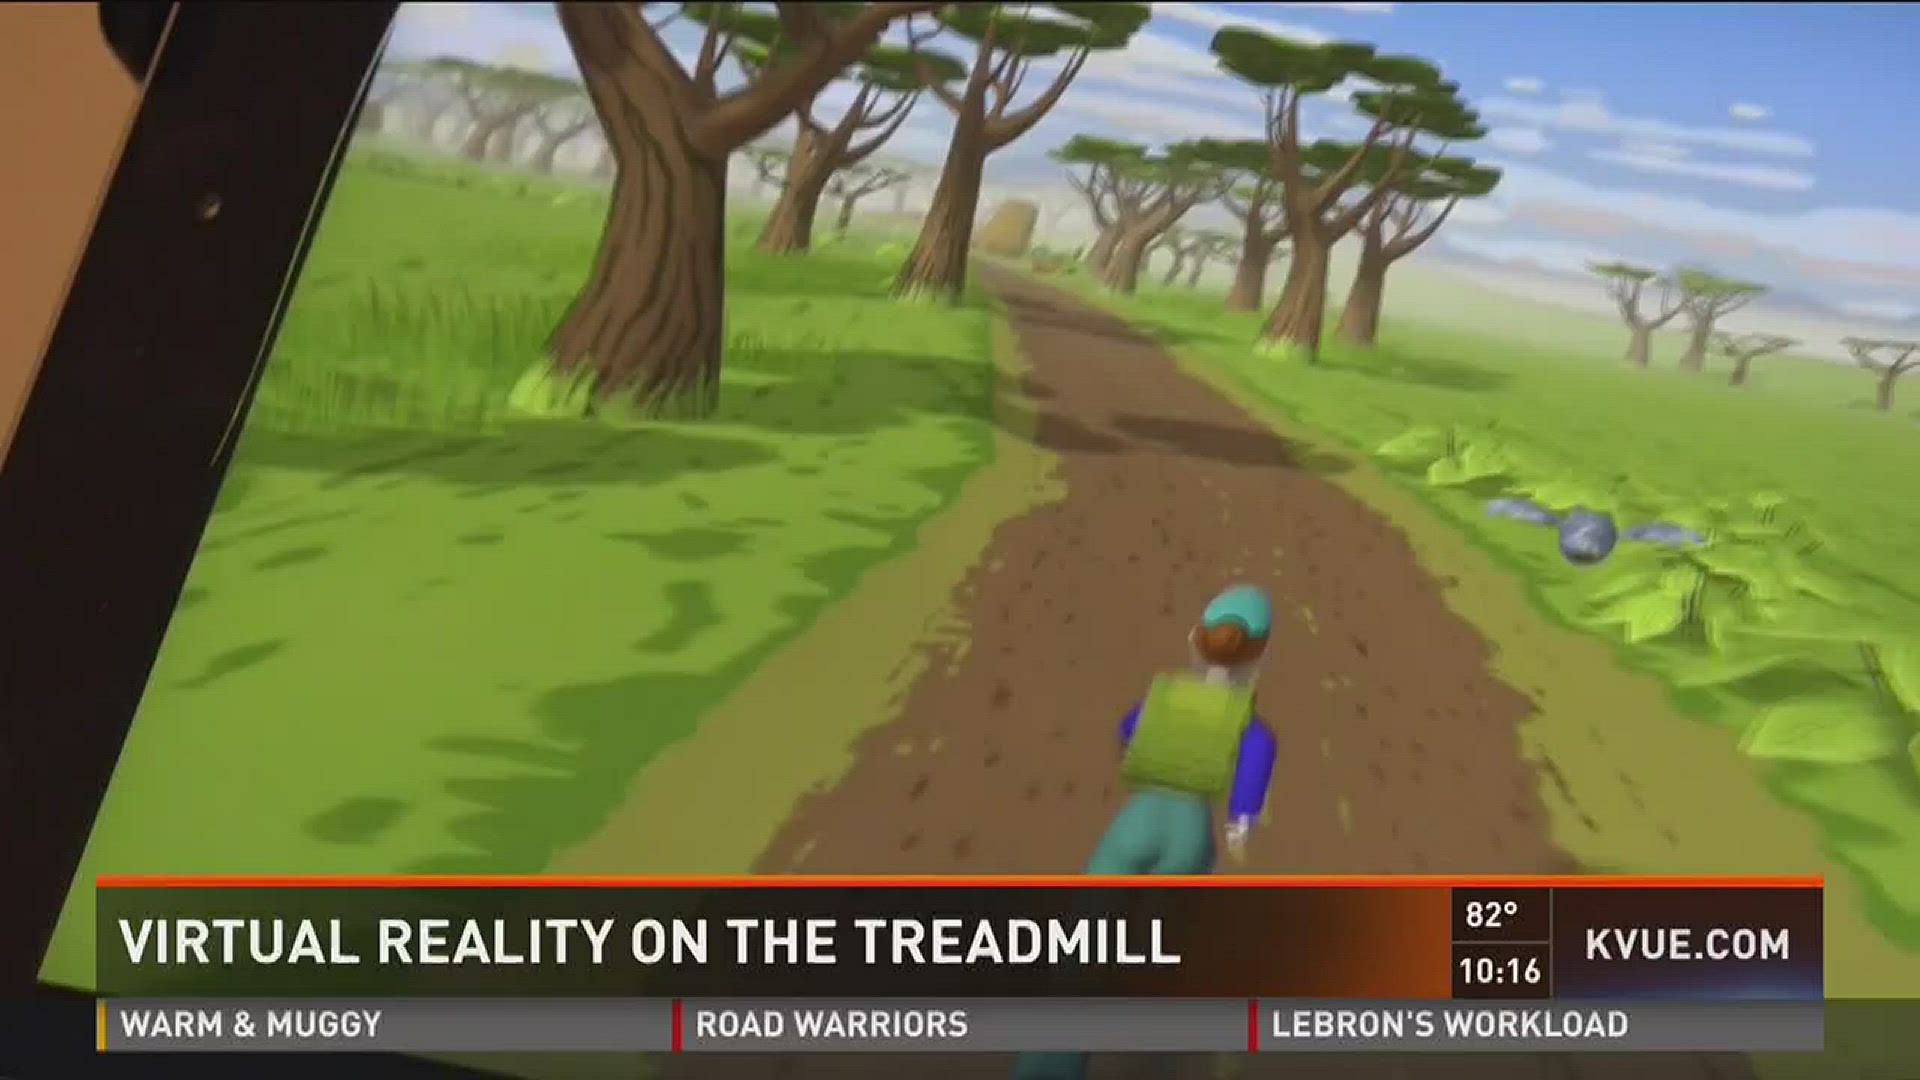 Virtual reality on the treadmill